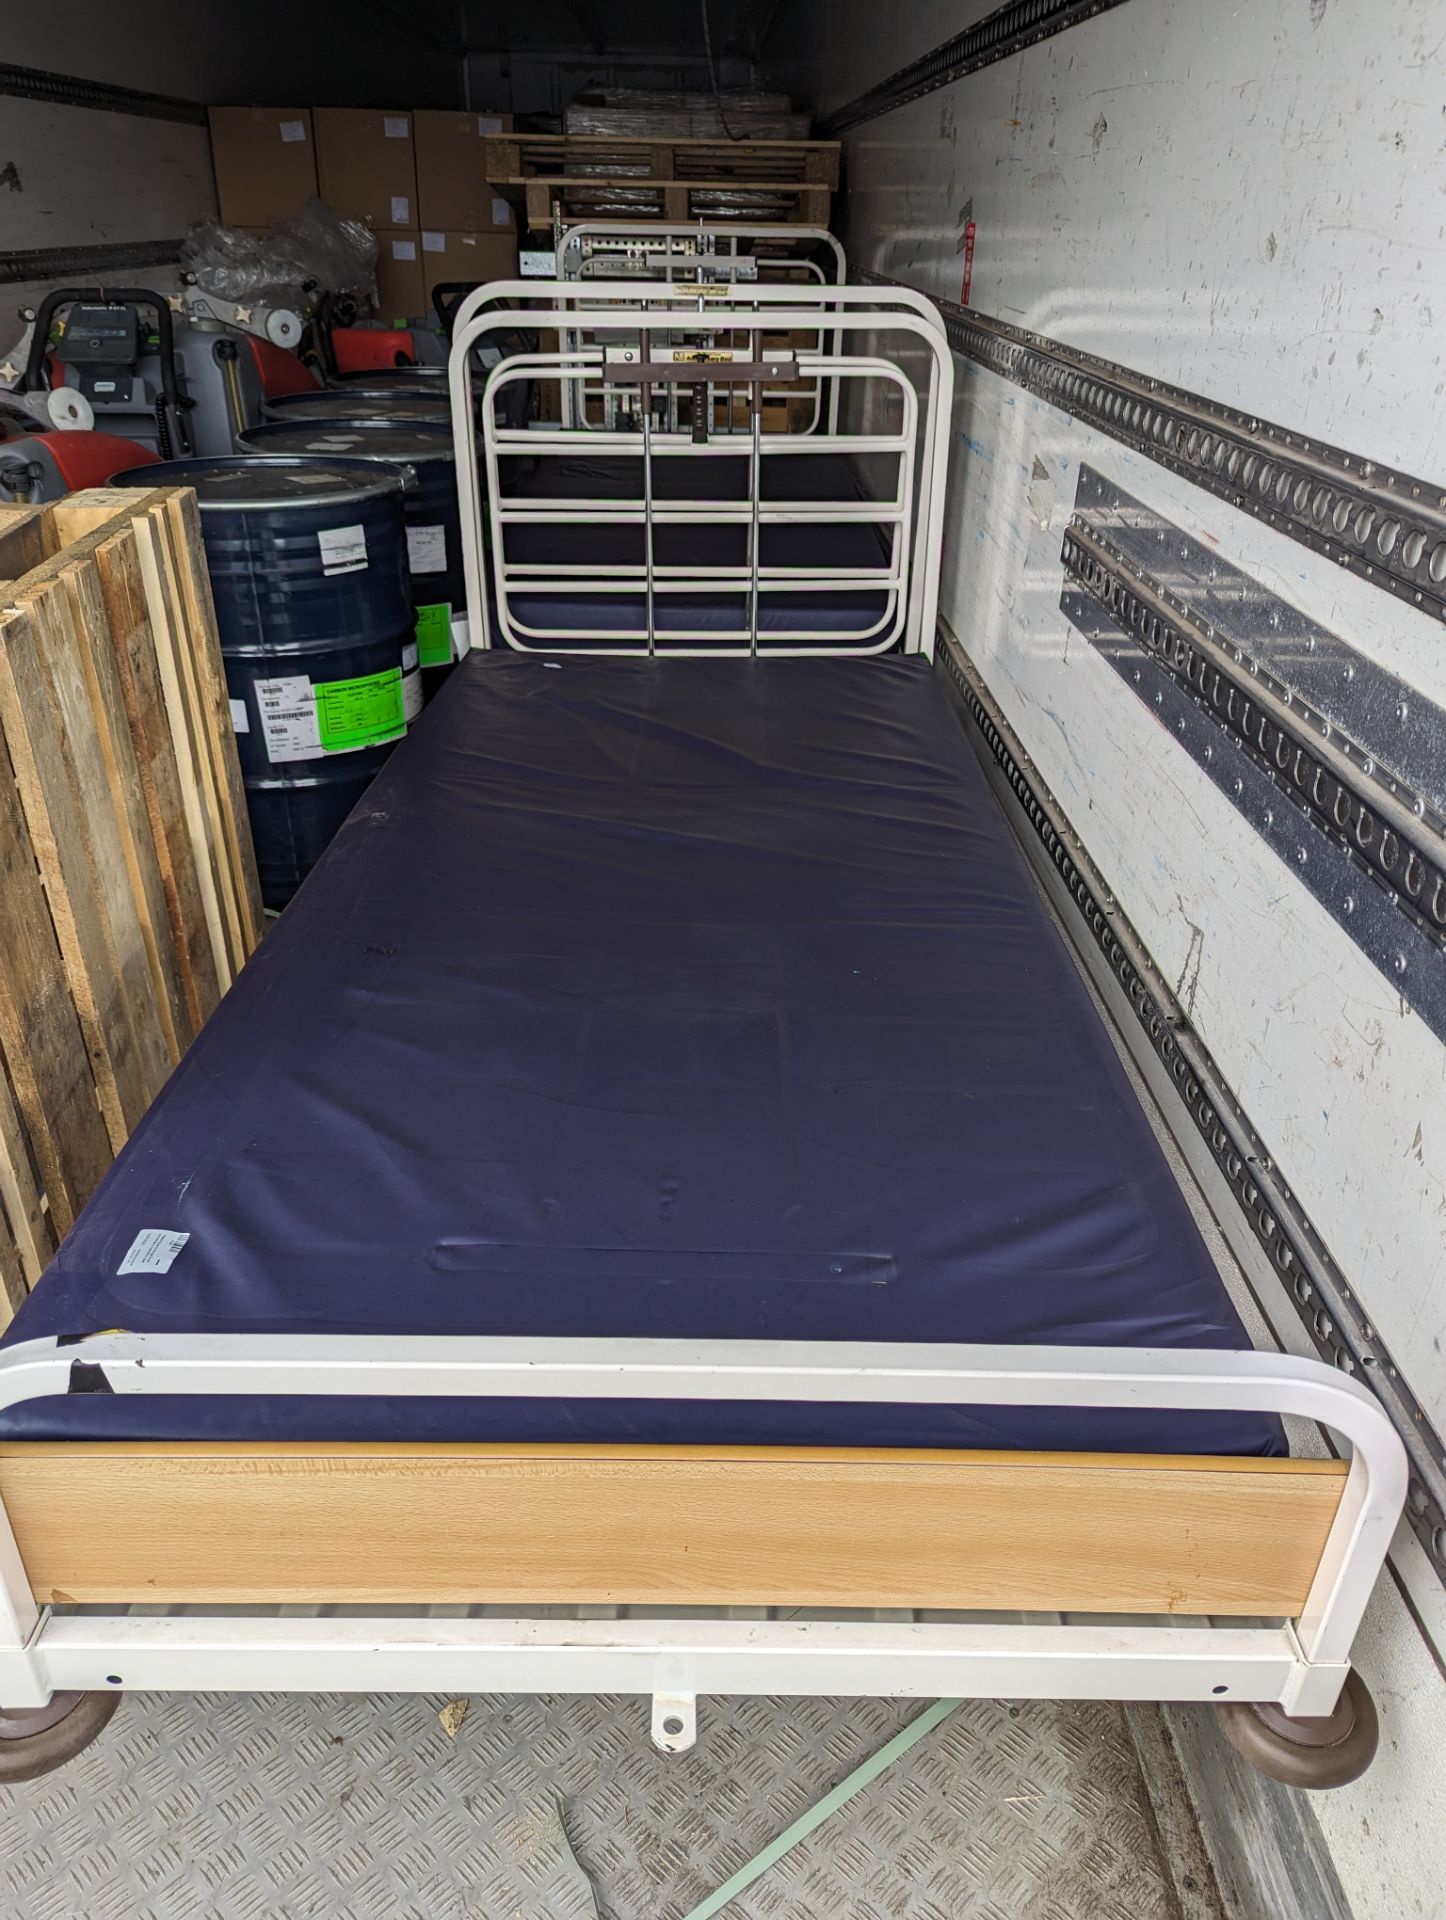 1 x Nesbit Evans Hydraulic Adjustable Hospital Bed With Mattress - Image 3 of 3